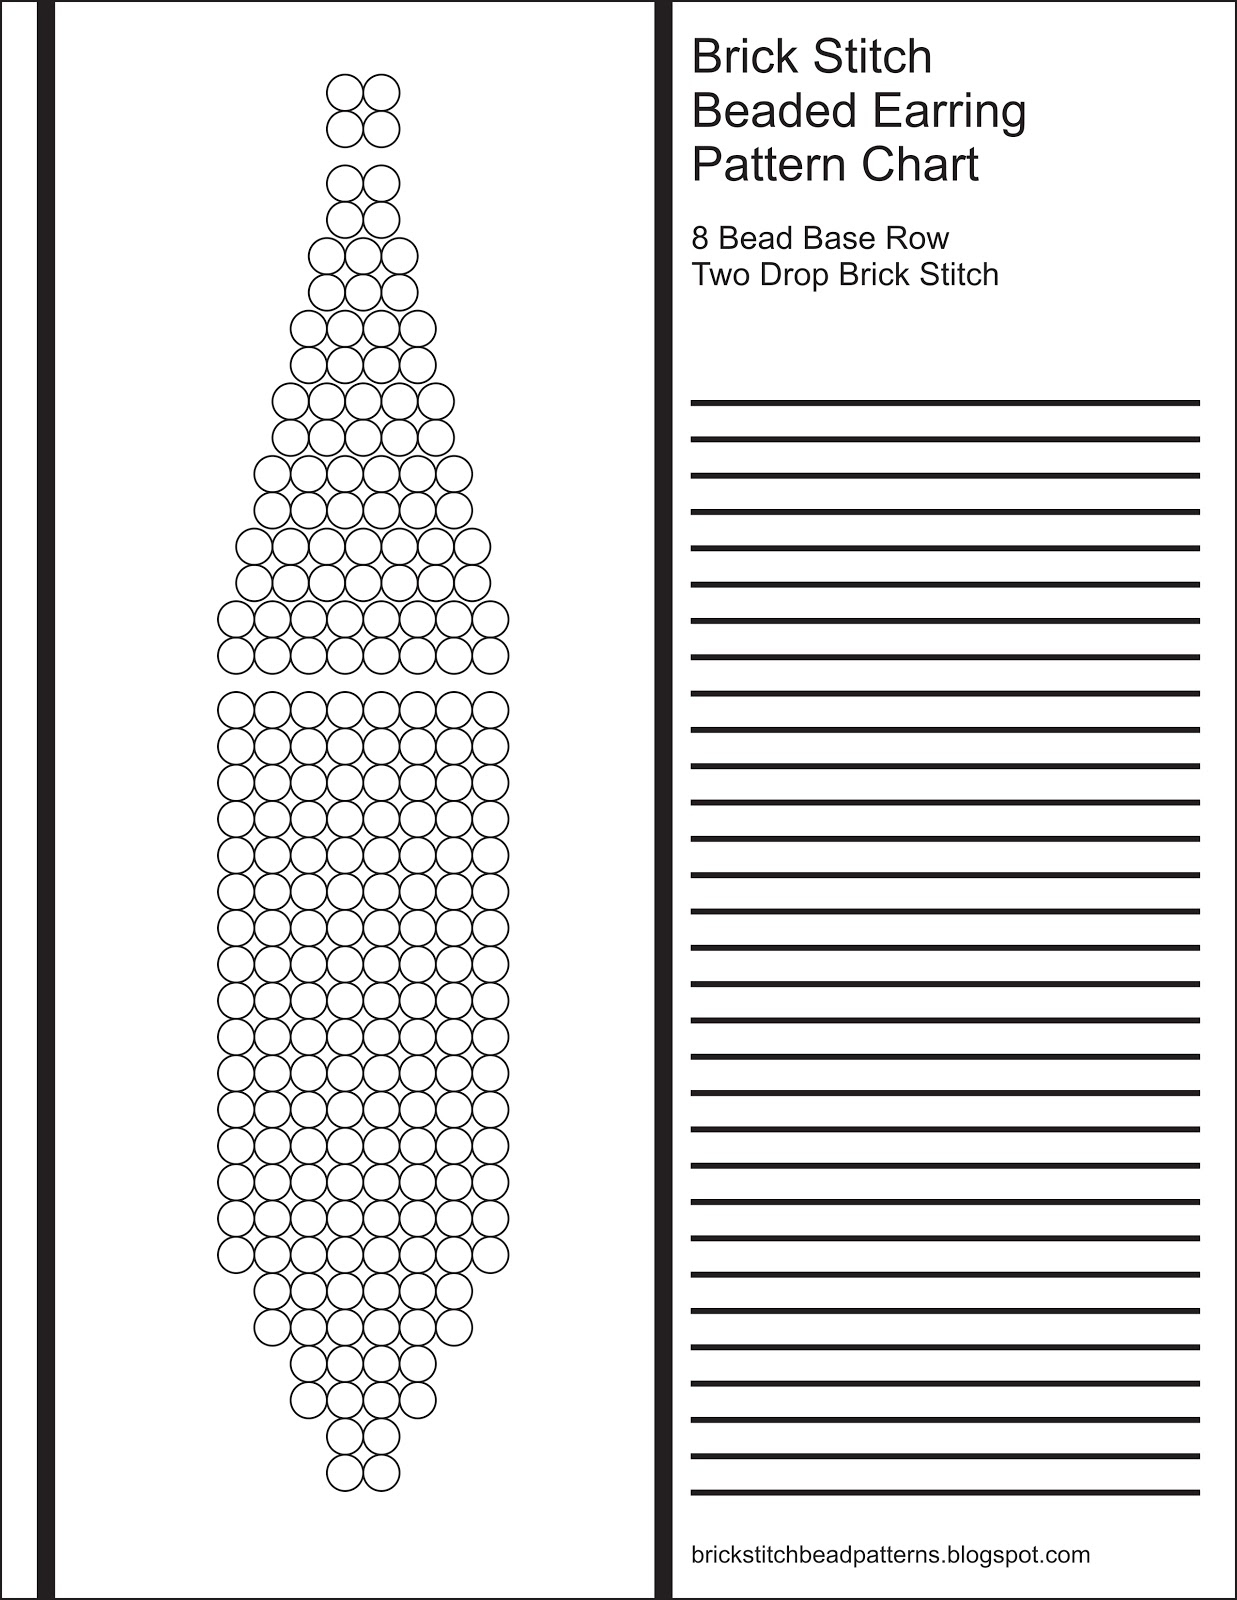 Brick Stitch Bead Patterns Journal: 8 Bead Base Row 2 Drop Blank - Free Printable Beading Patterns